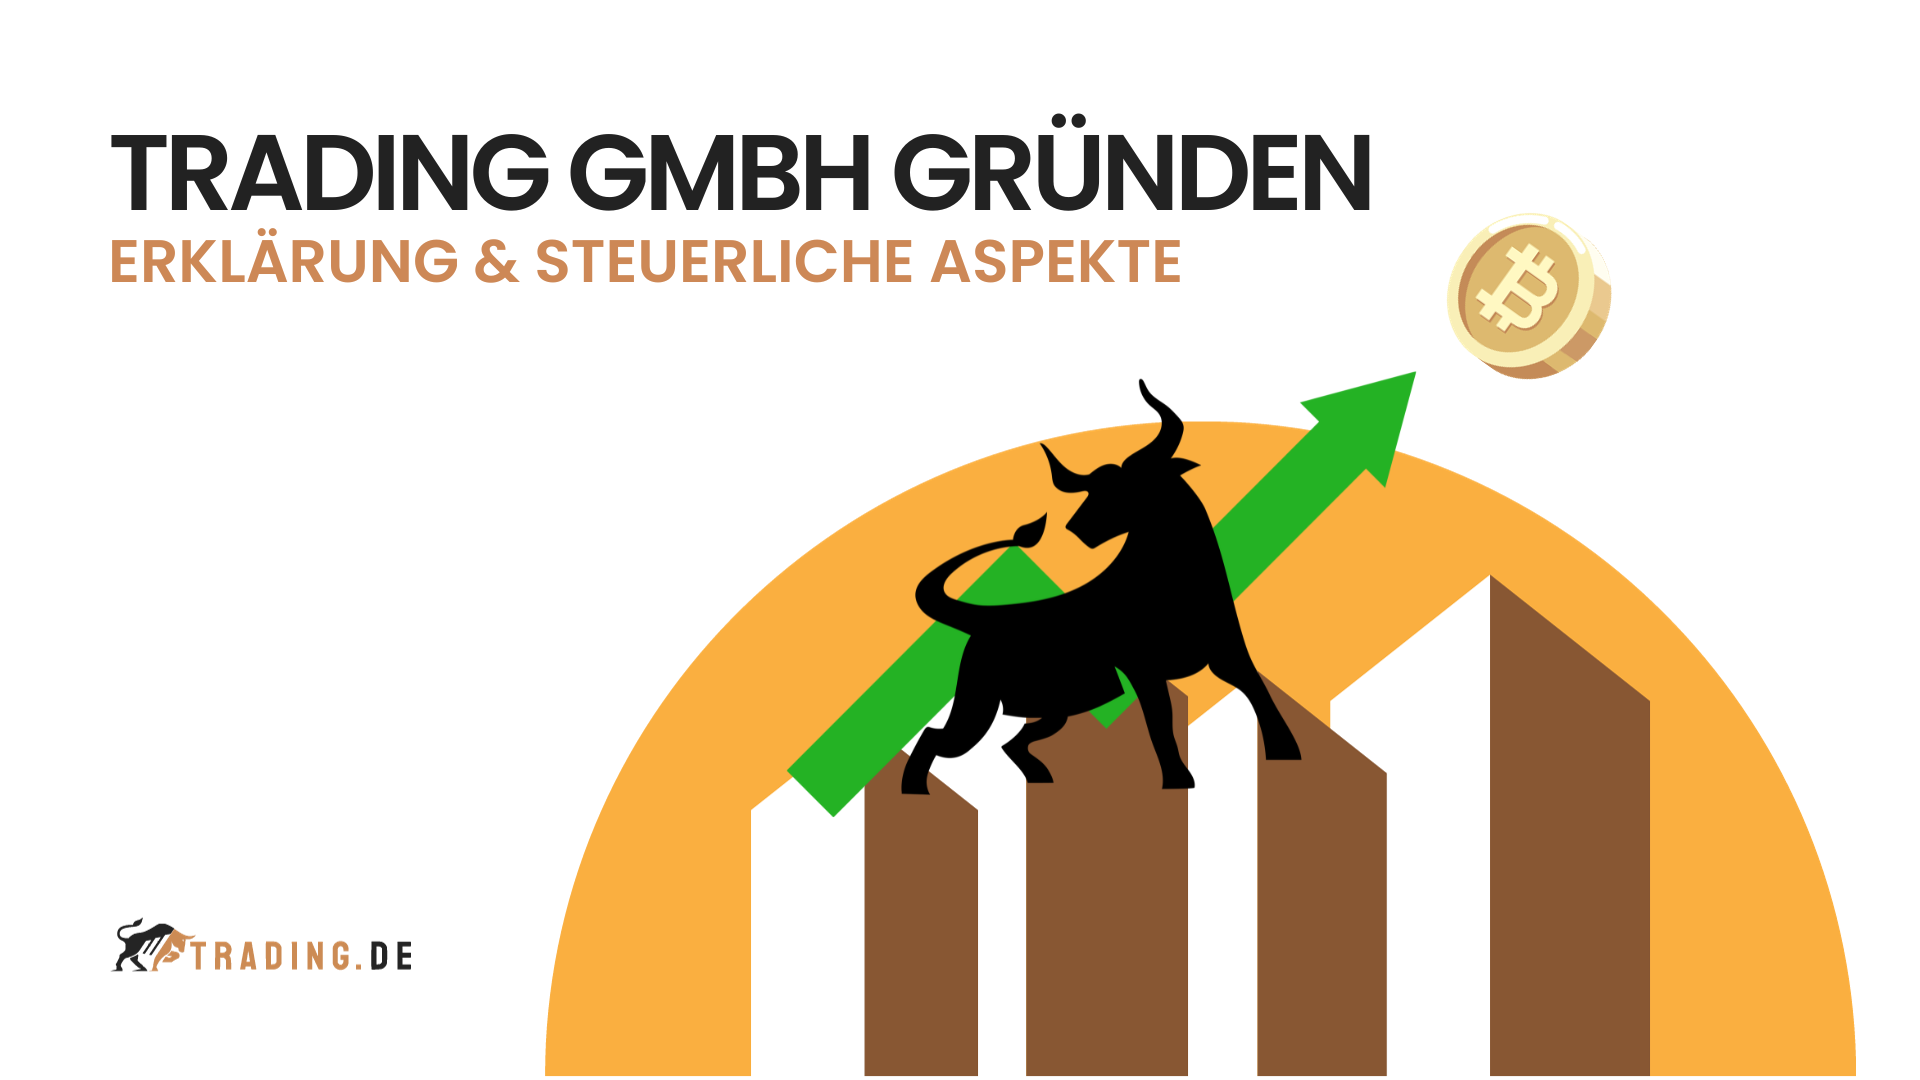 Trading GmbH gruenden